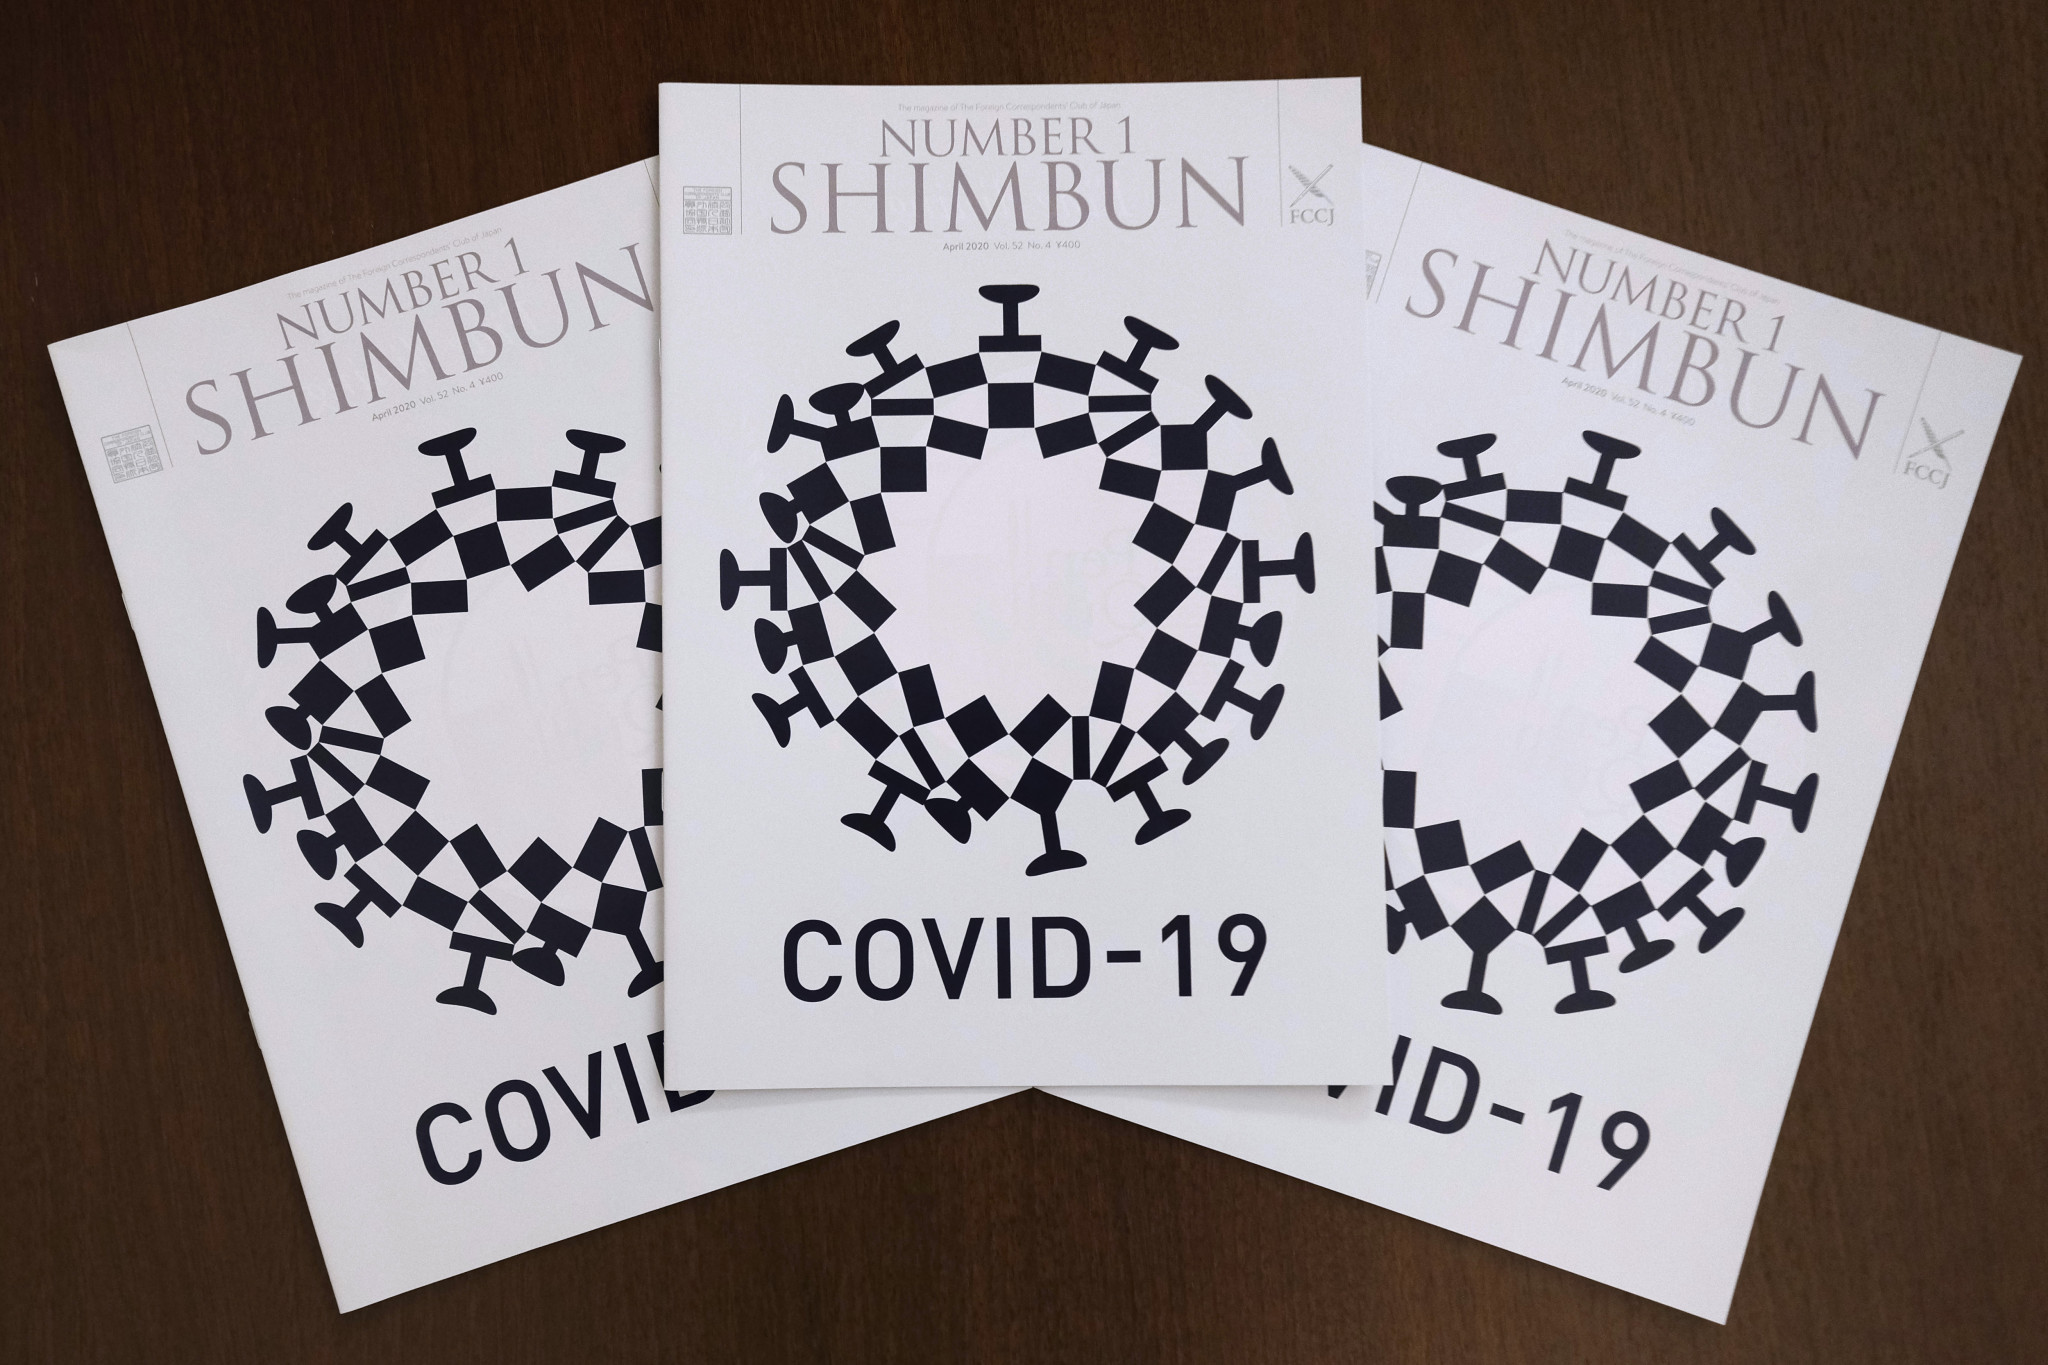 Journalists criticise FCCJ and Tokyo 2020 over coronavirus logo row